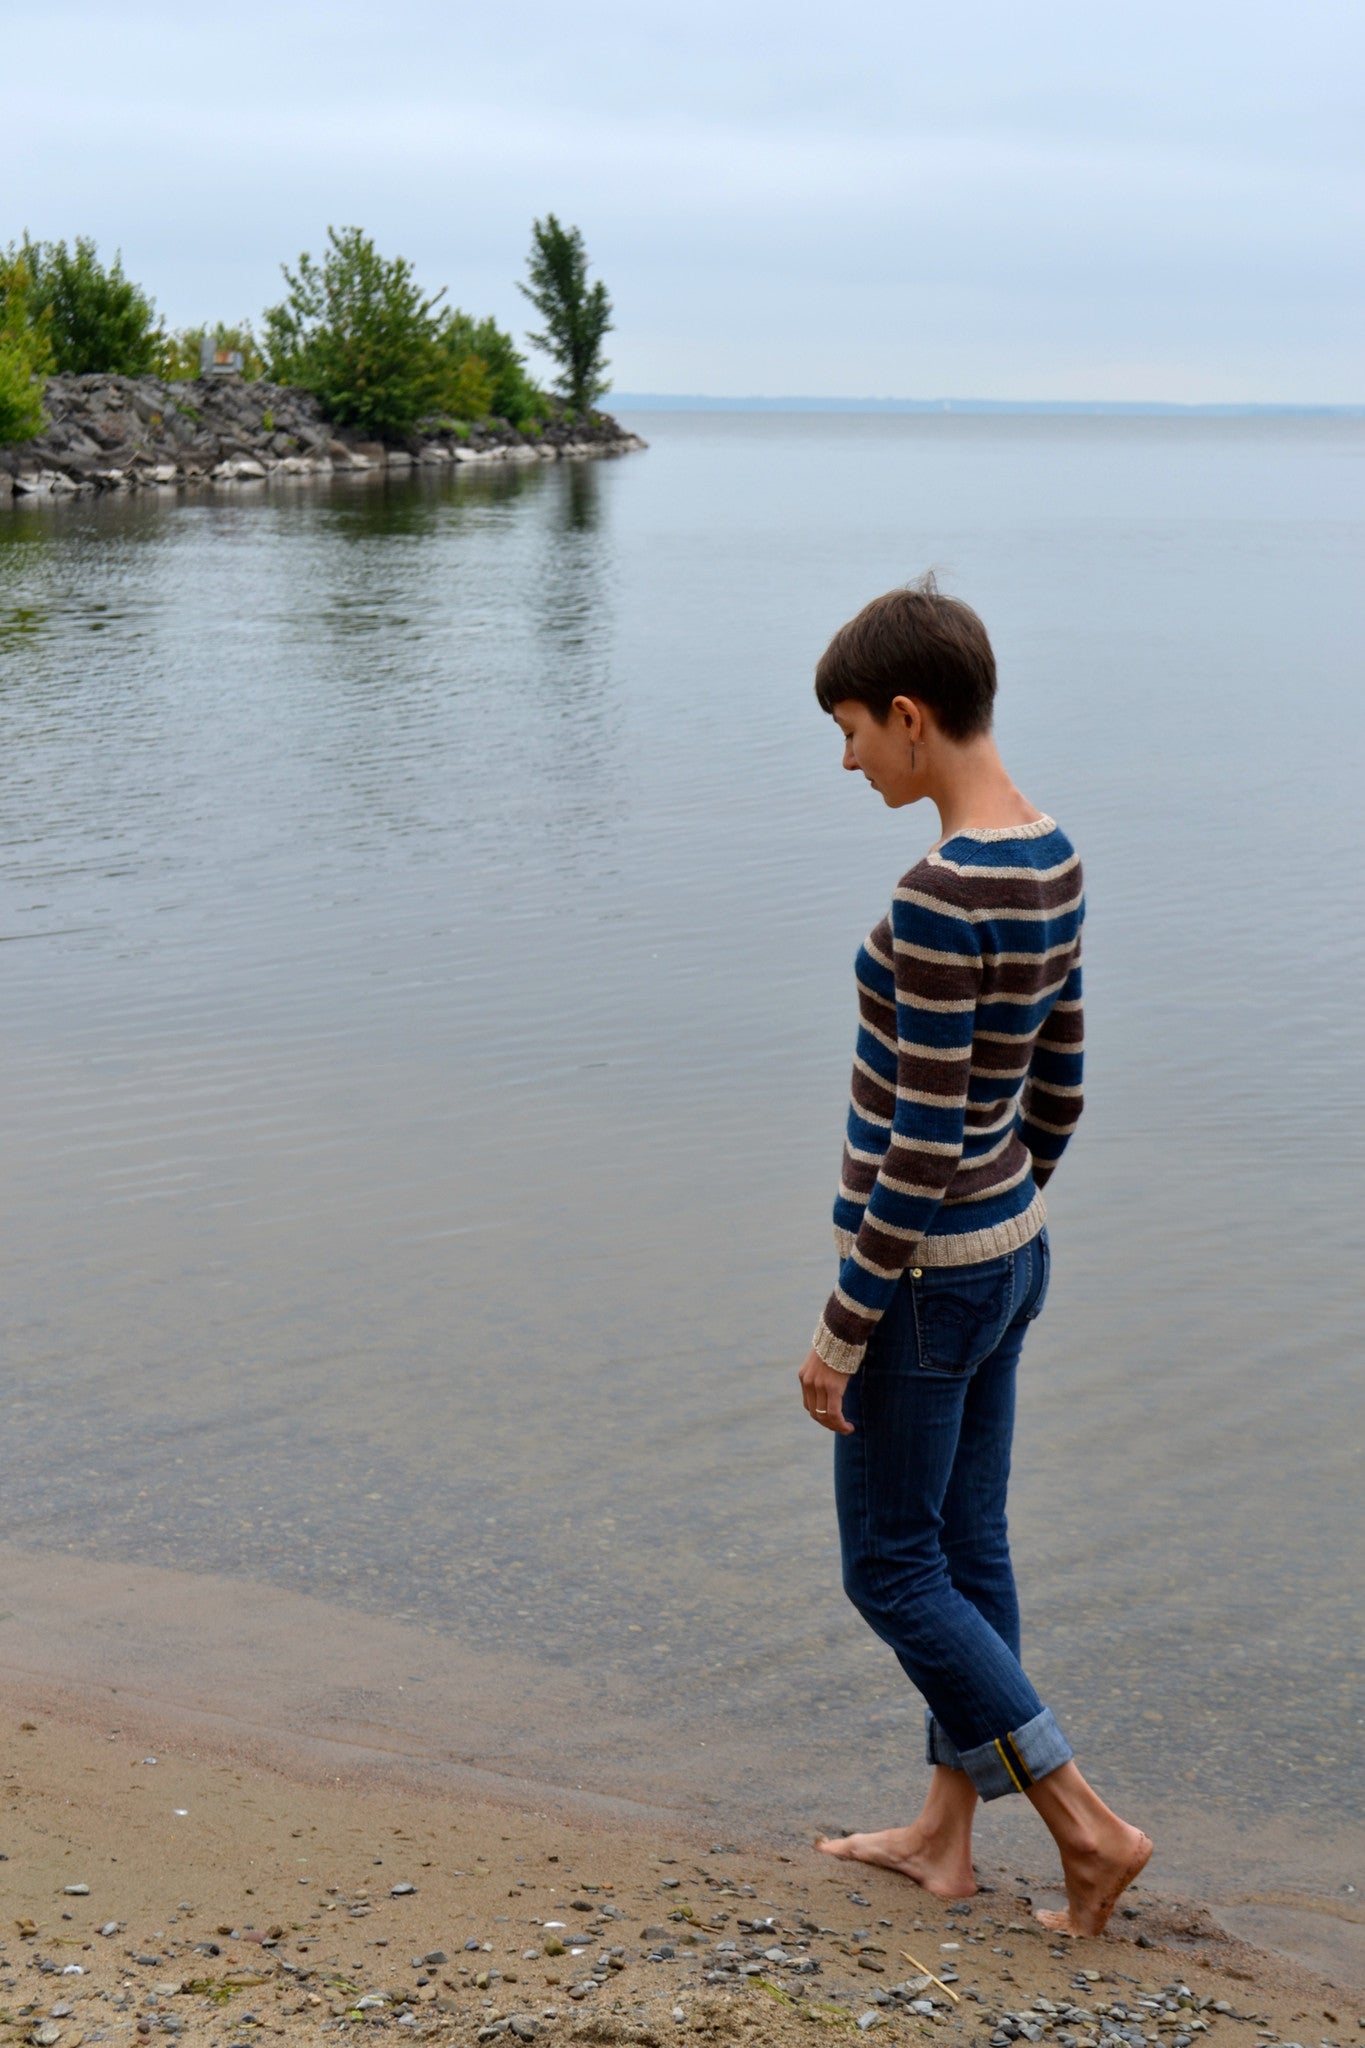 Stillness knitting pattern worn with jeans on the beach